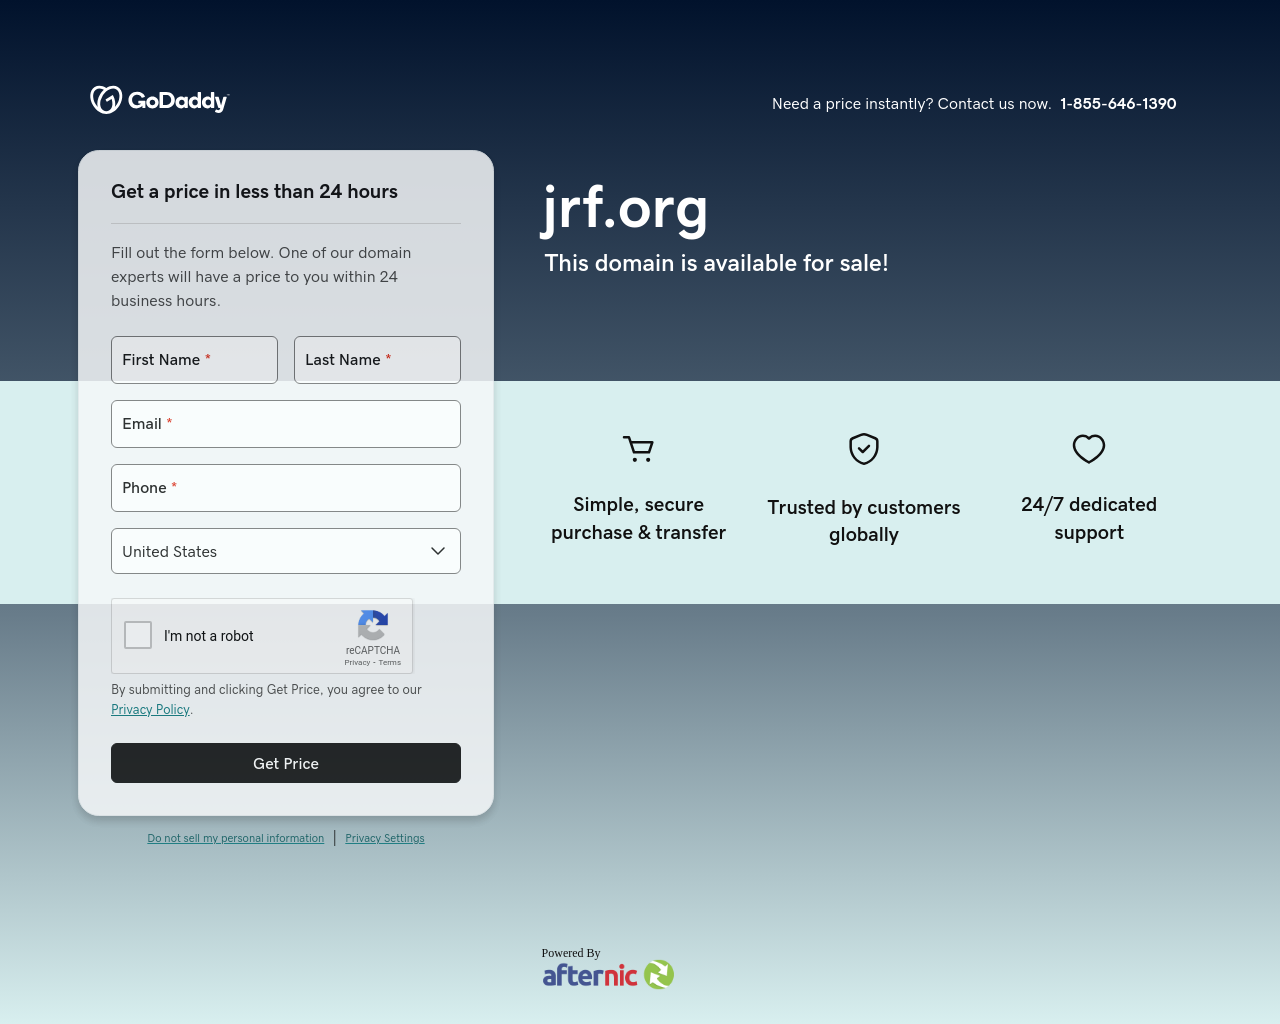 jrf.org